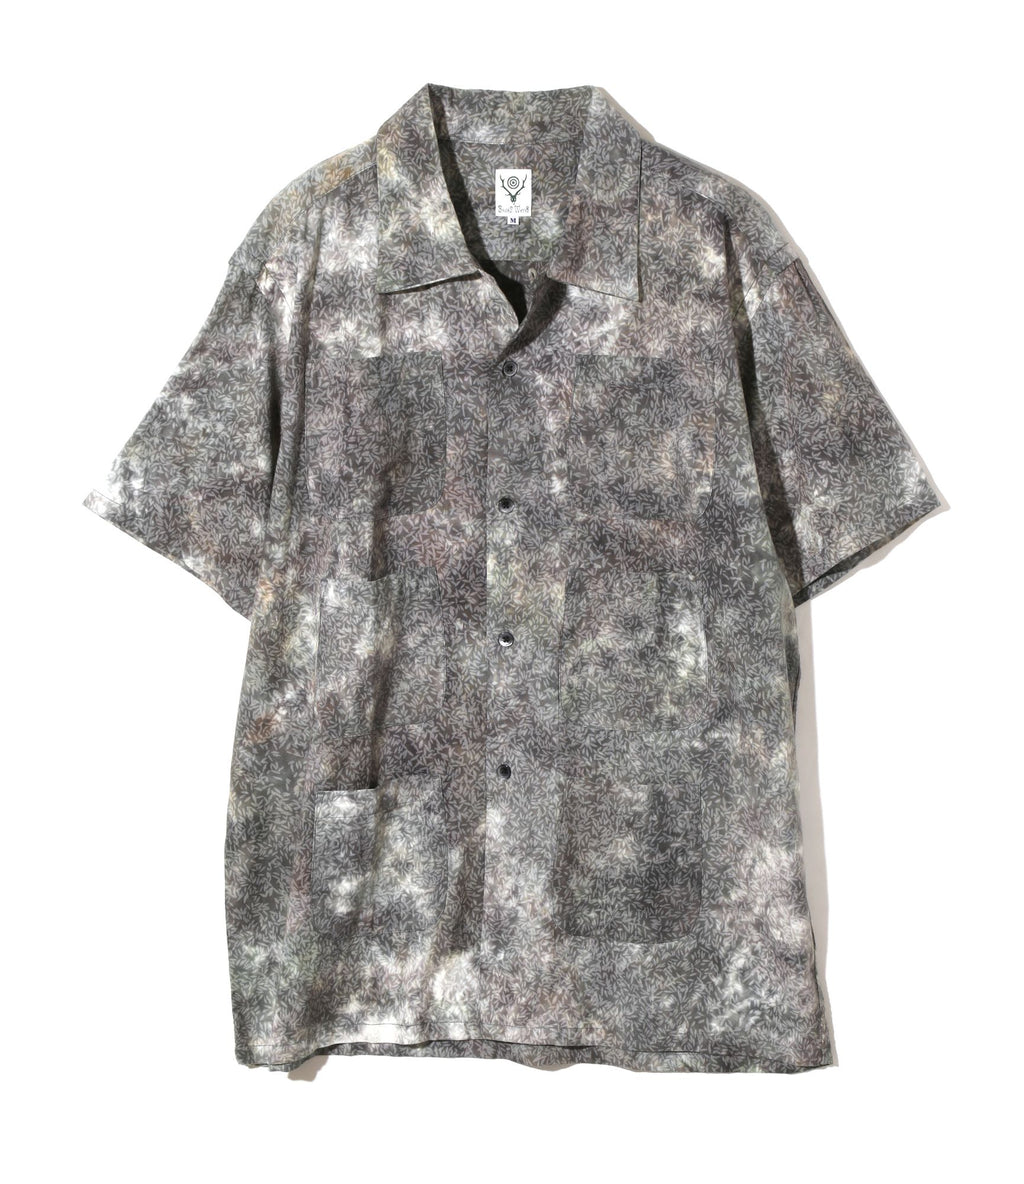 South2 West8 S/S 6 Pocket Shirt - Uneven dye Charcoal